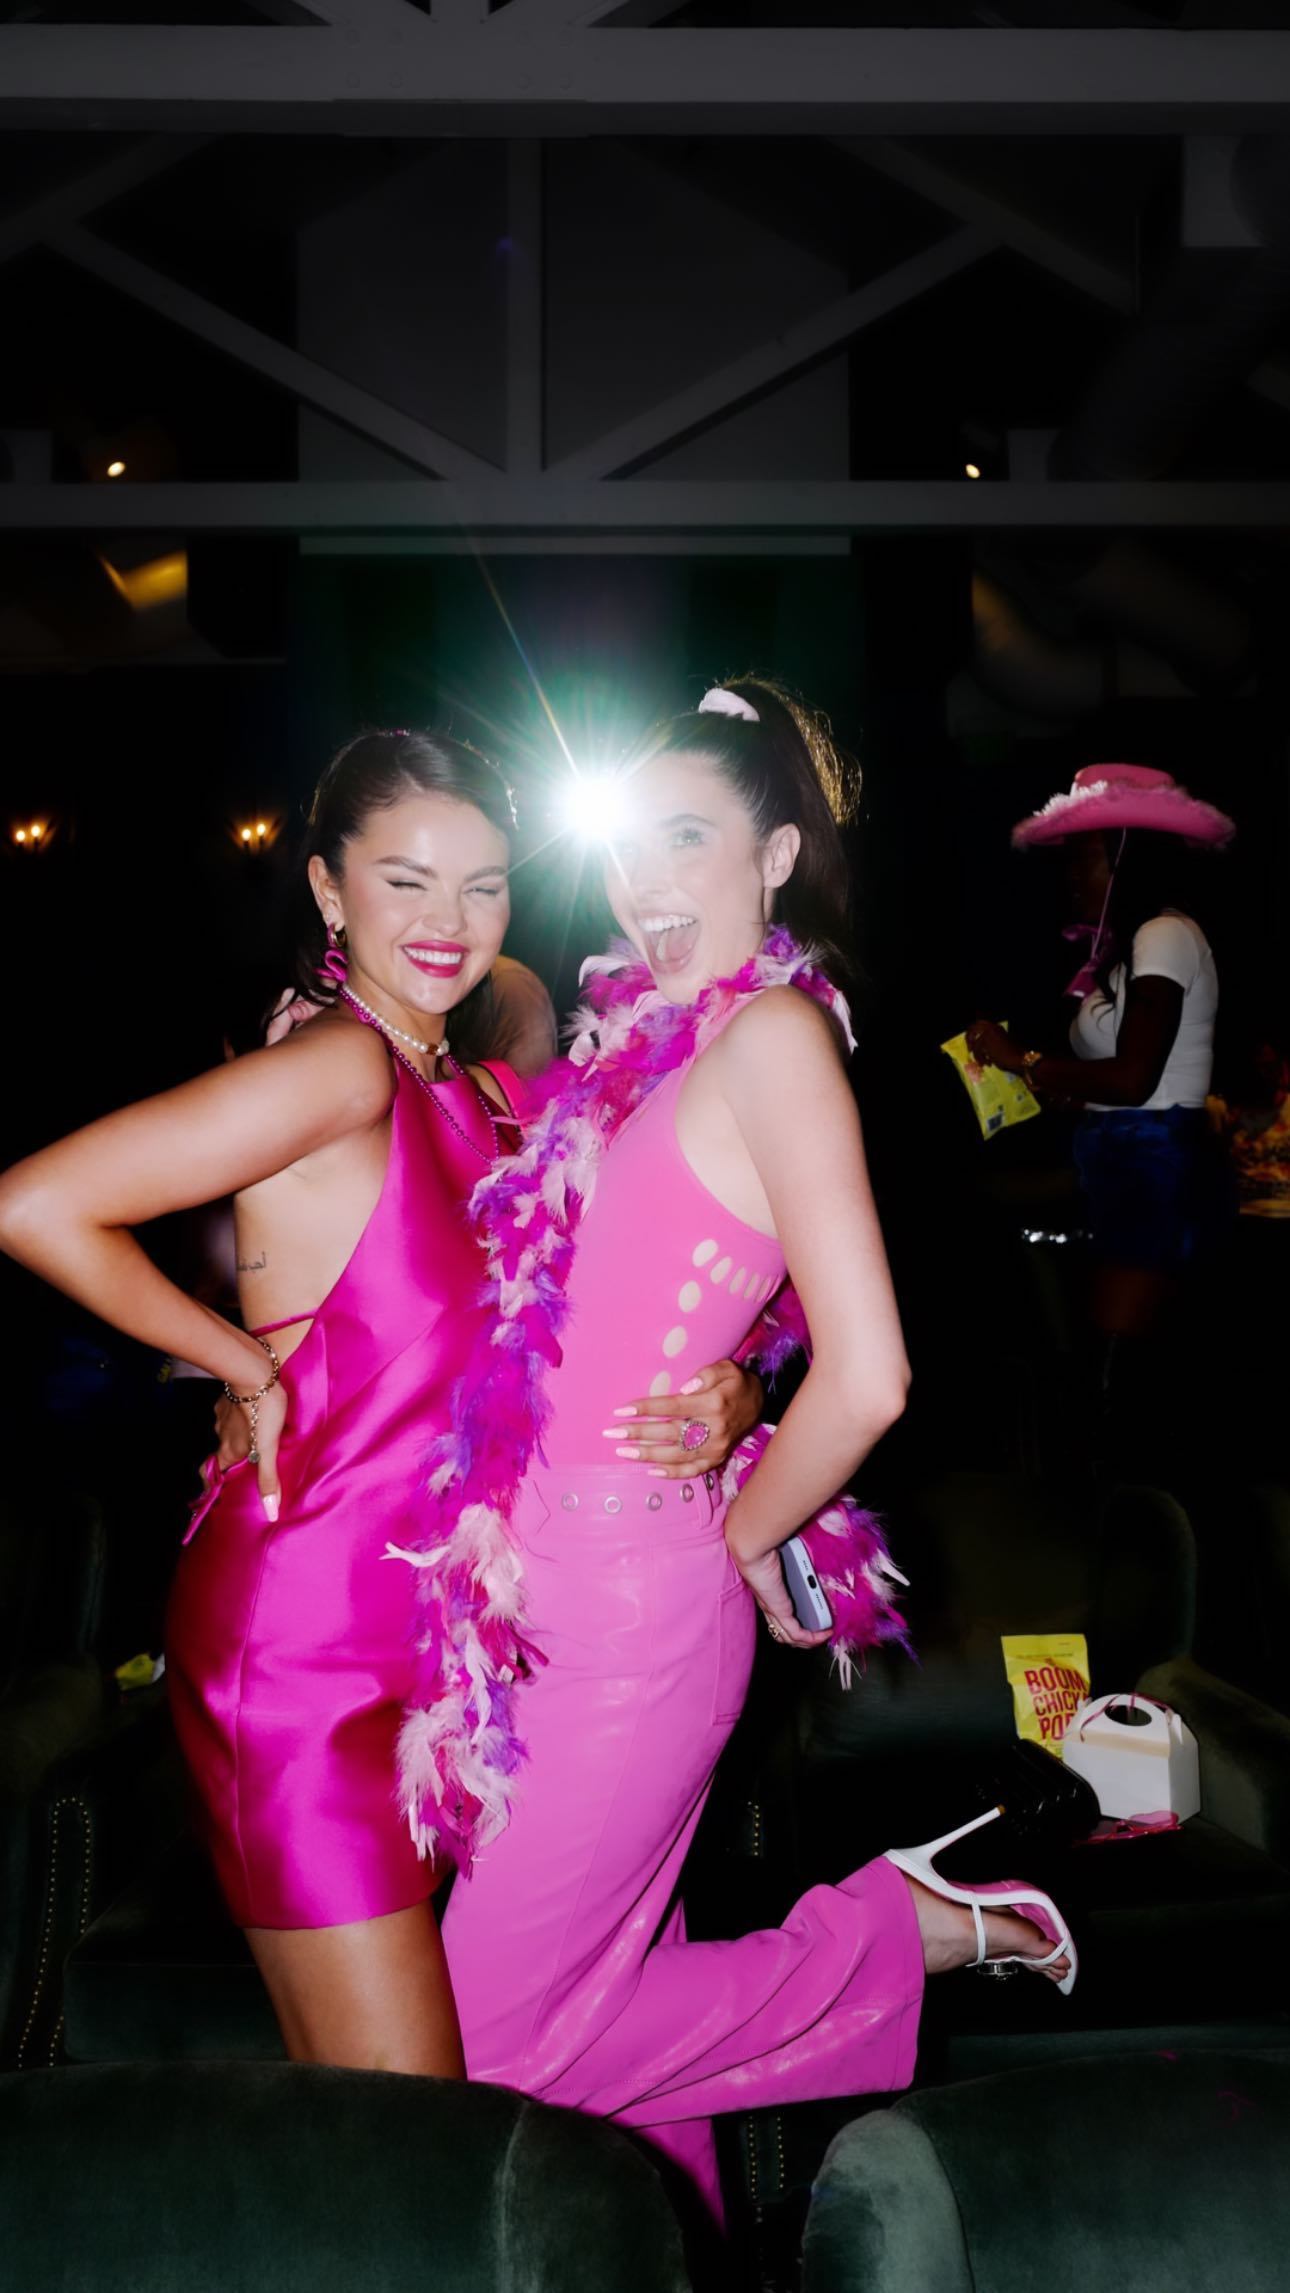 Selena Gomez Rocks the Boat in a Pink Bikini! - Photo 22